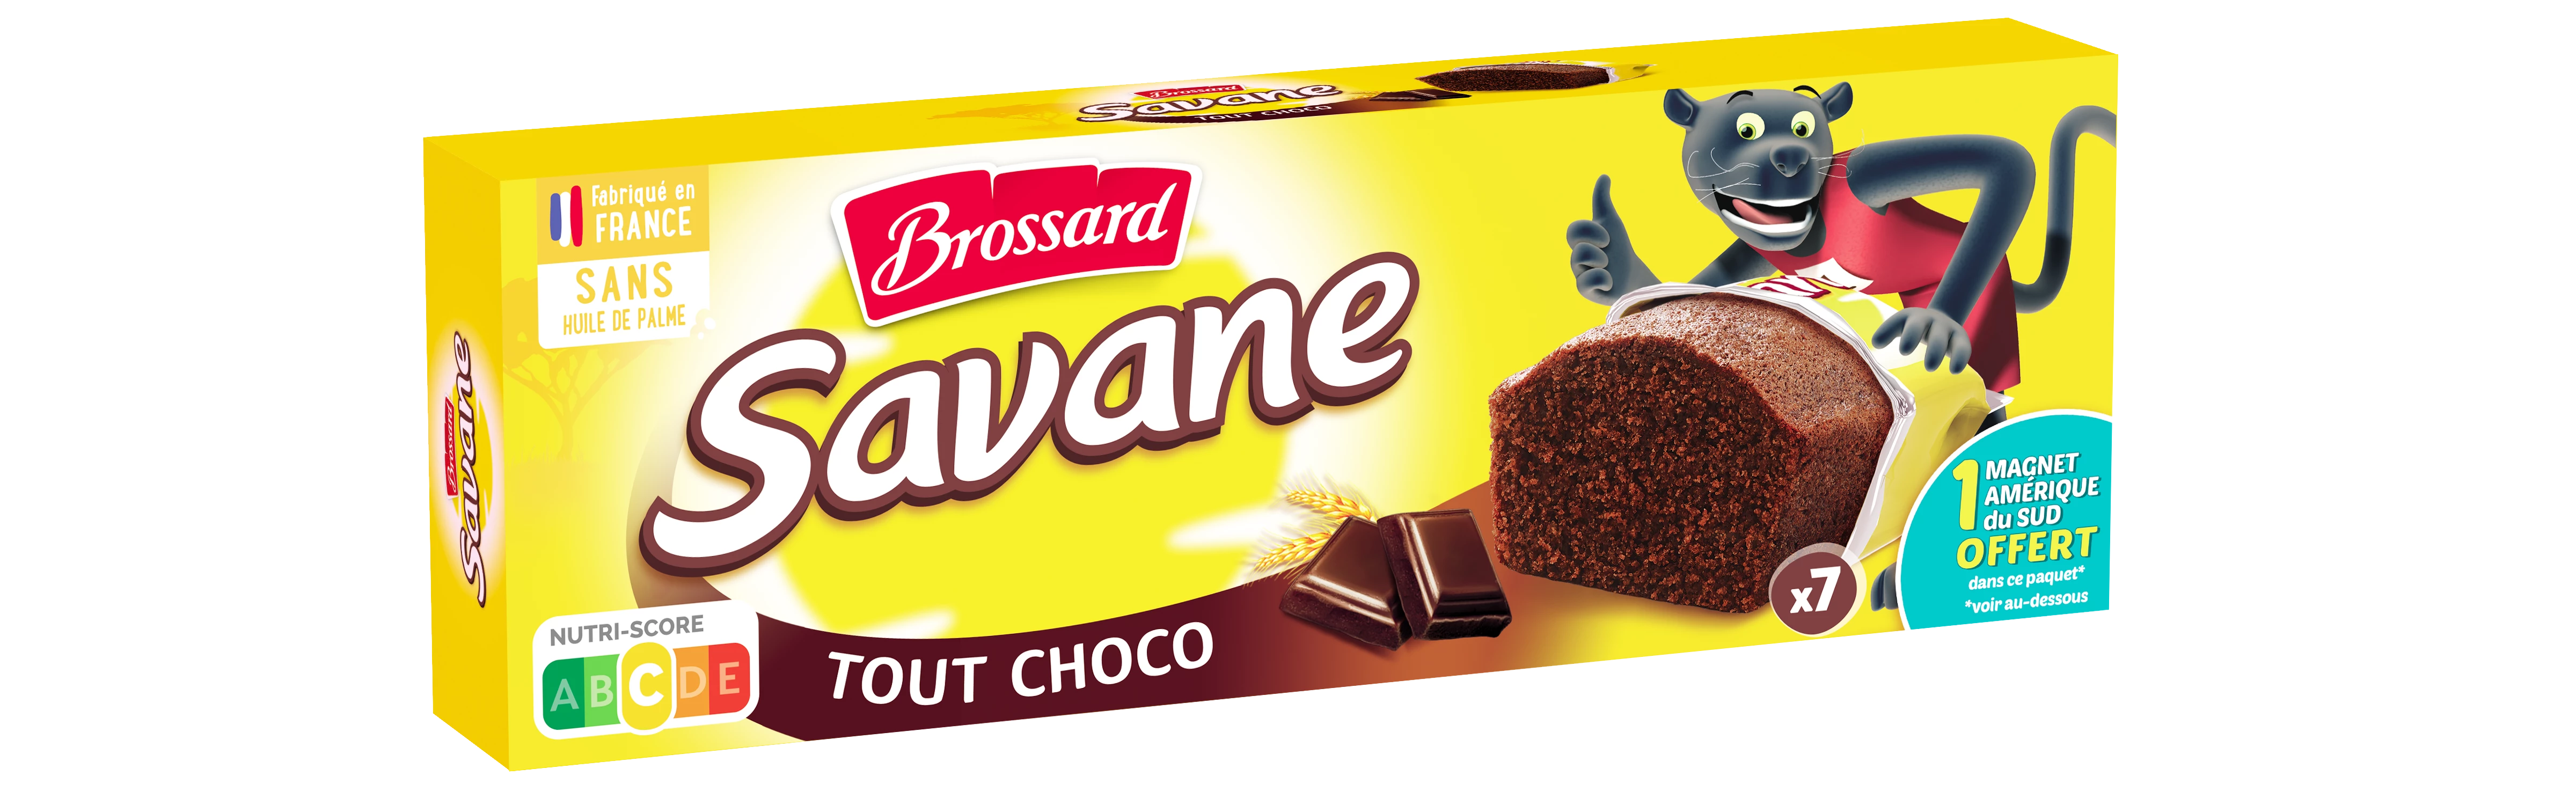 Savane Pocket Tutto Cioccolato X7 210g